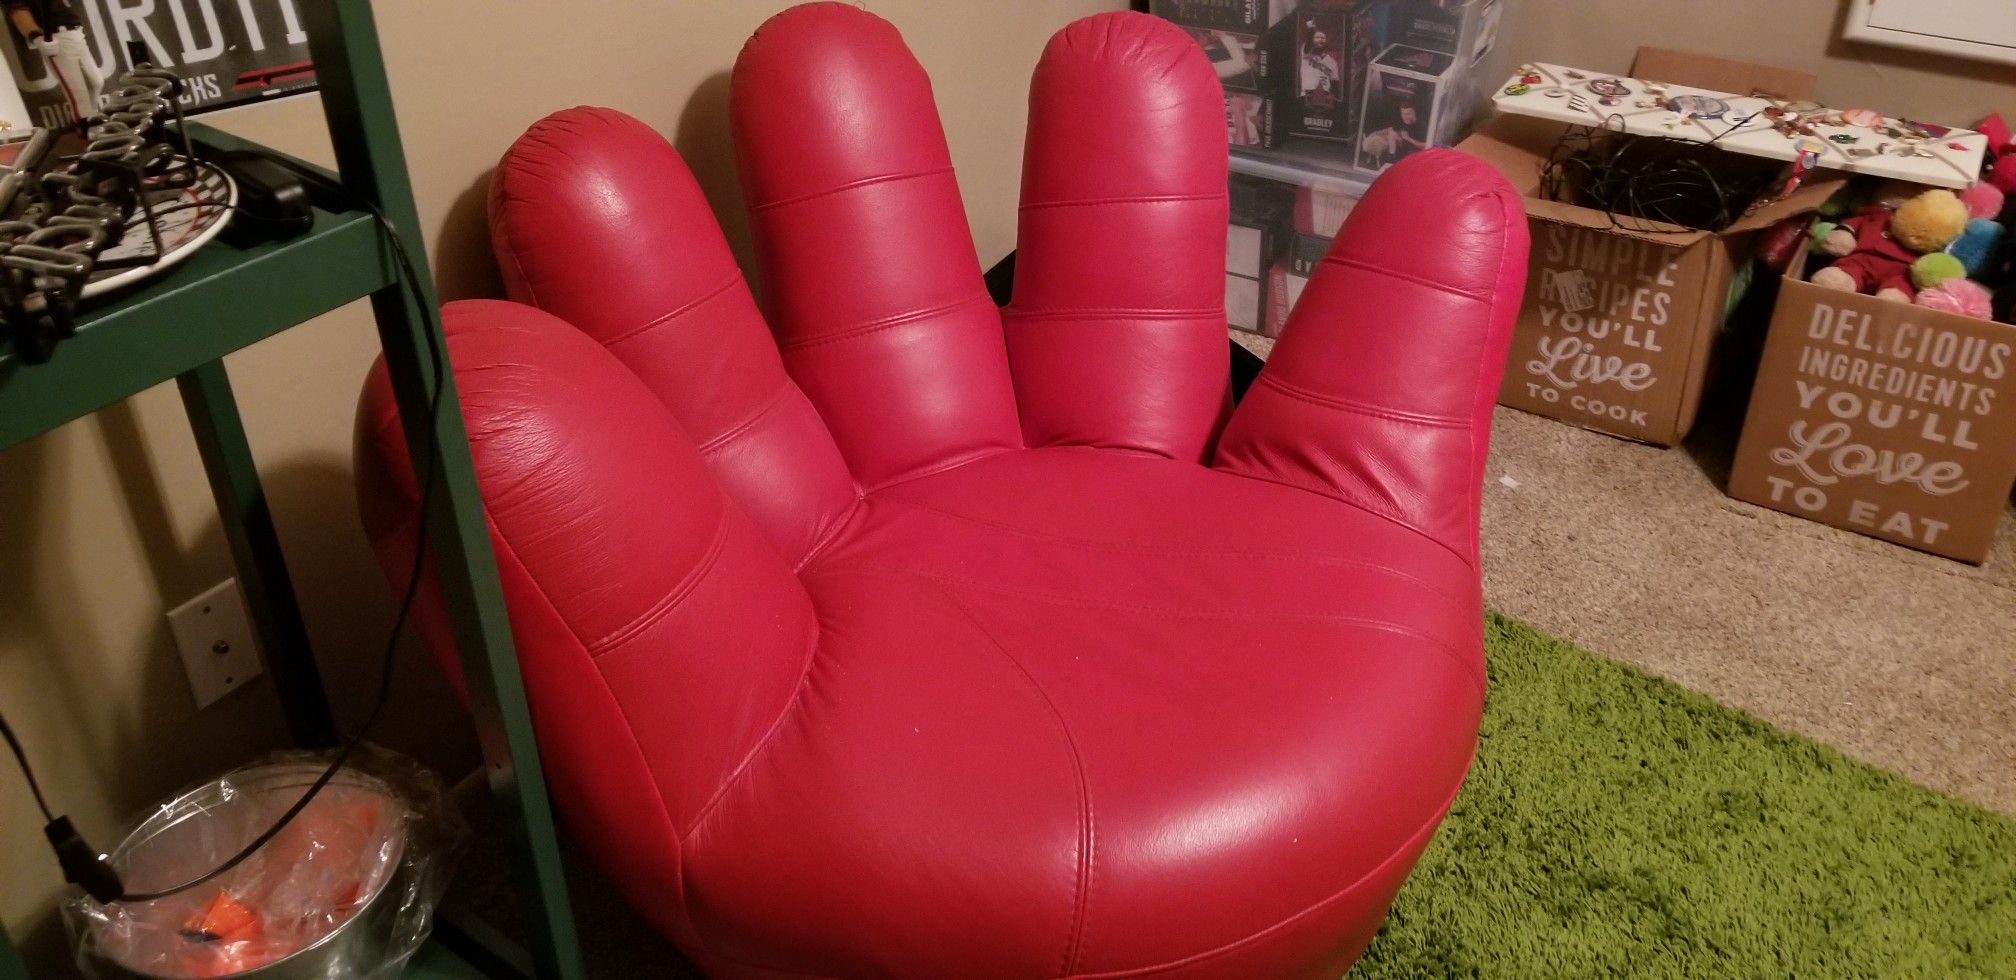 Leather chair, Baseball glove, hand